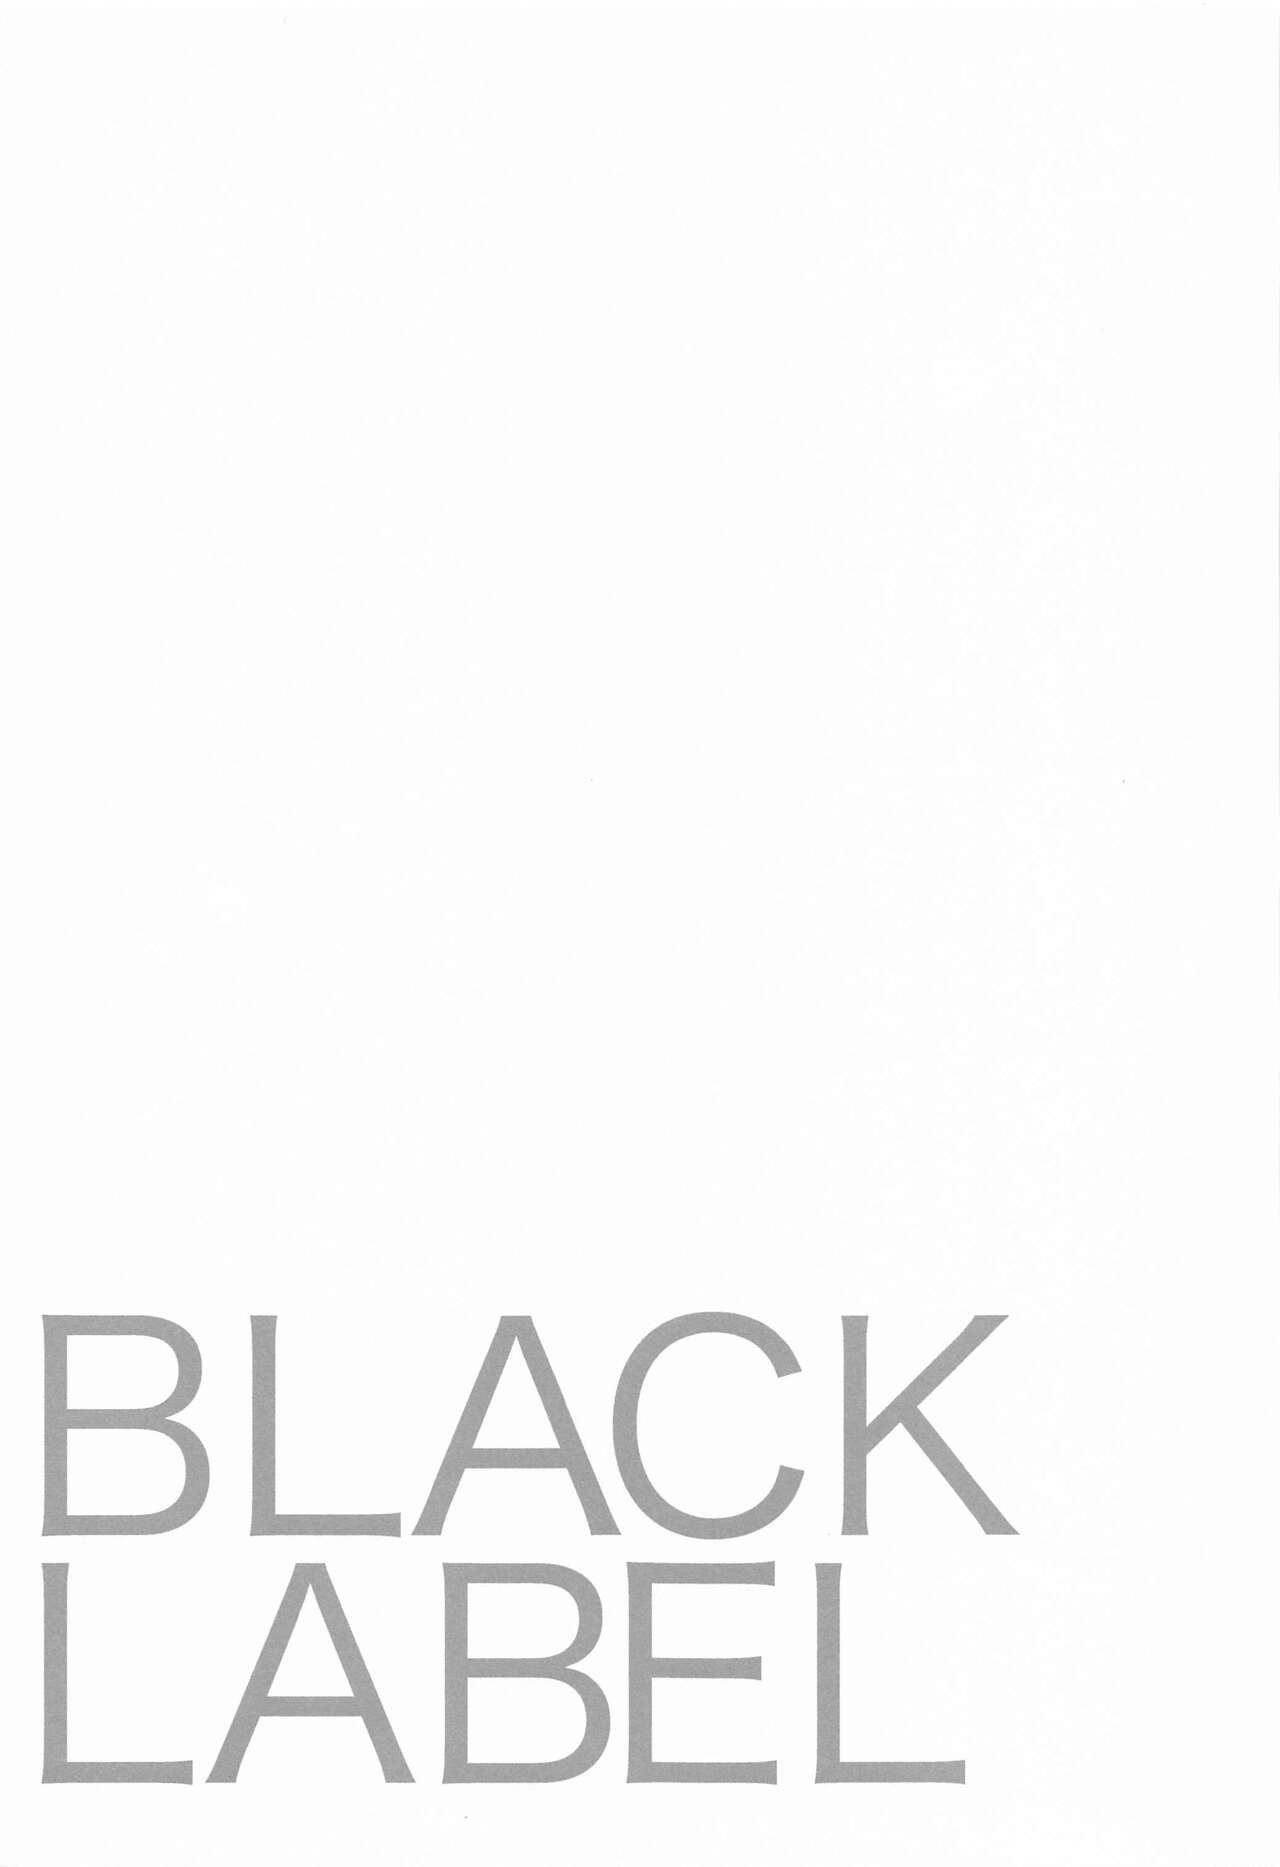 BLACK LABEL